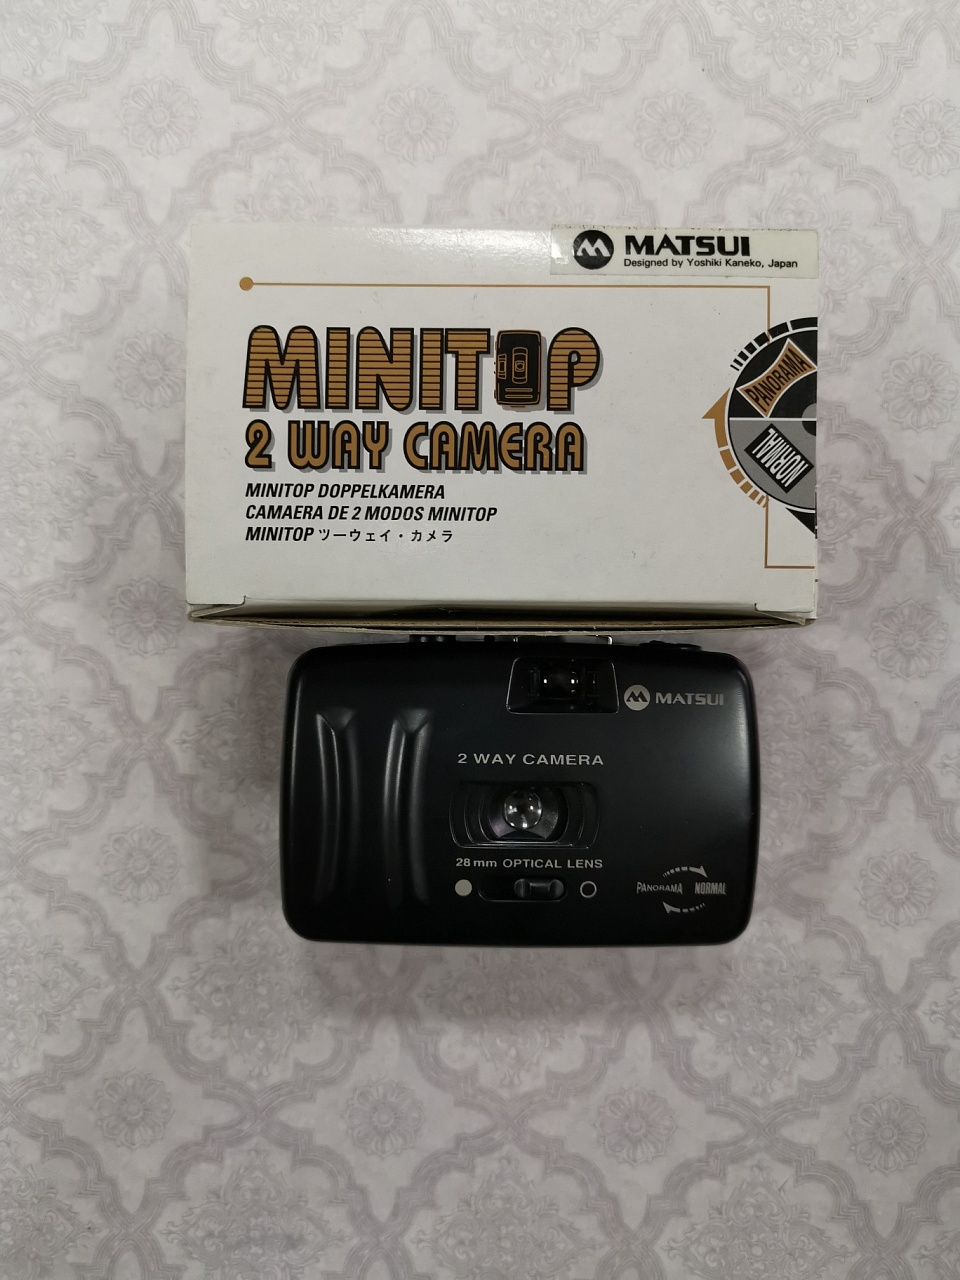 Matsui Minitop 2 way camera фото №1